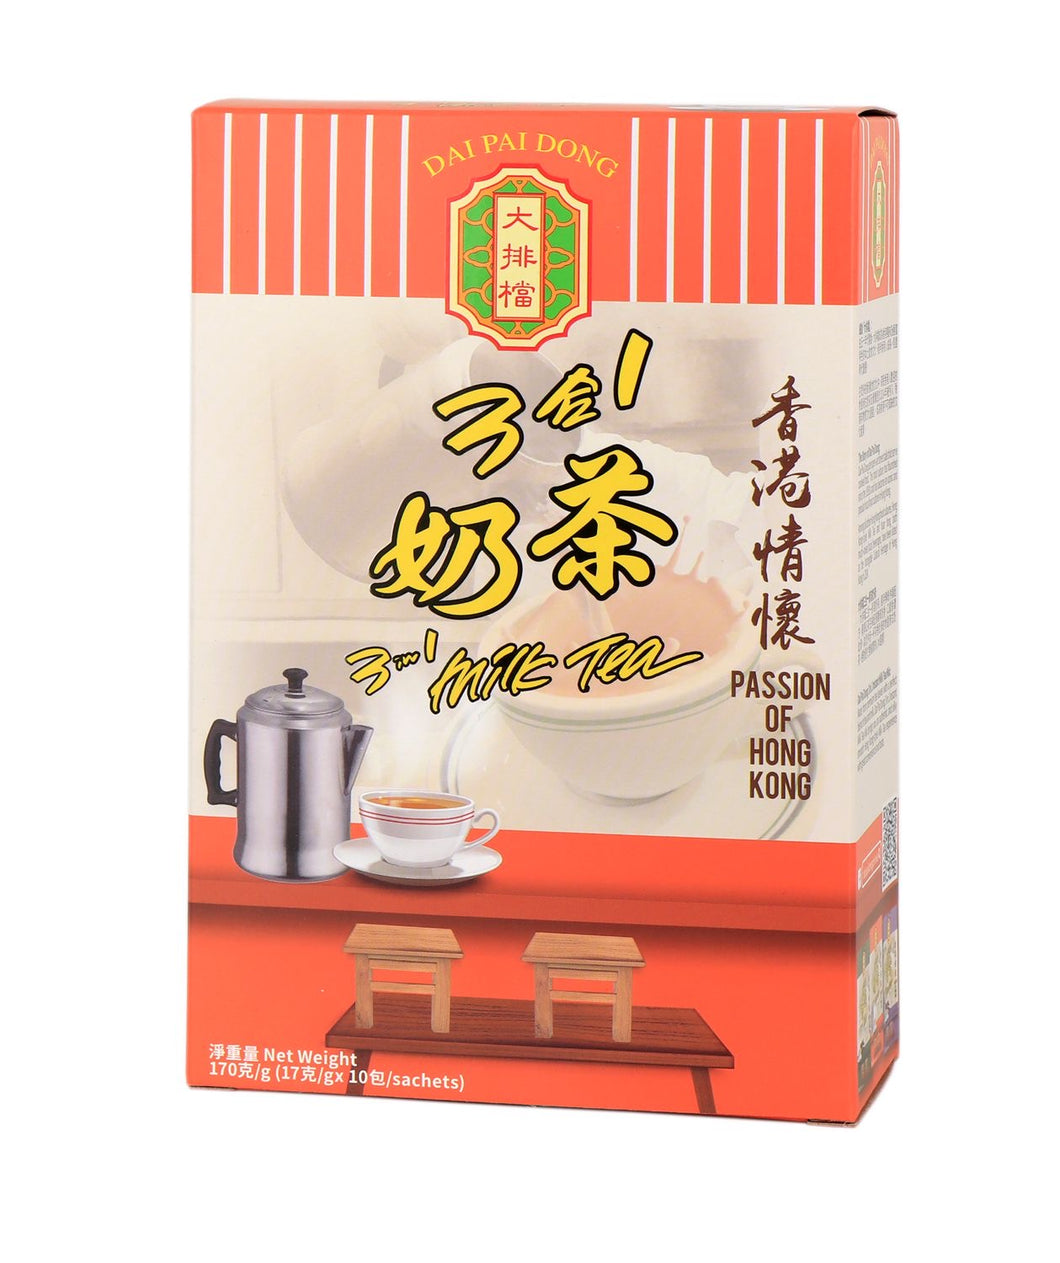 DPD 3 in 1 instant Milk Tea 170g  (17g x 10 Sachets) <br> 大排檔 3合1奶茶